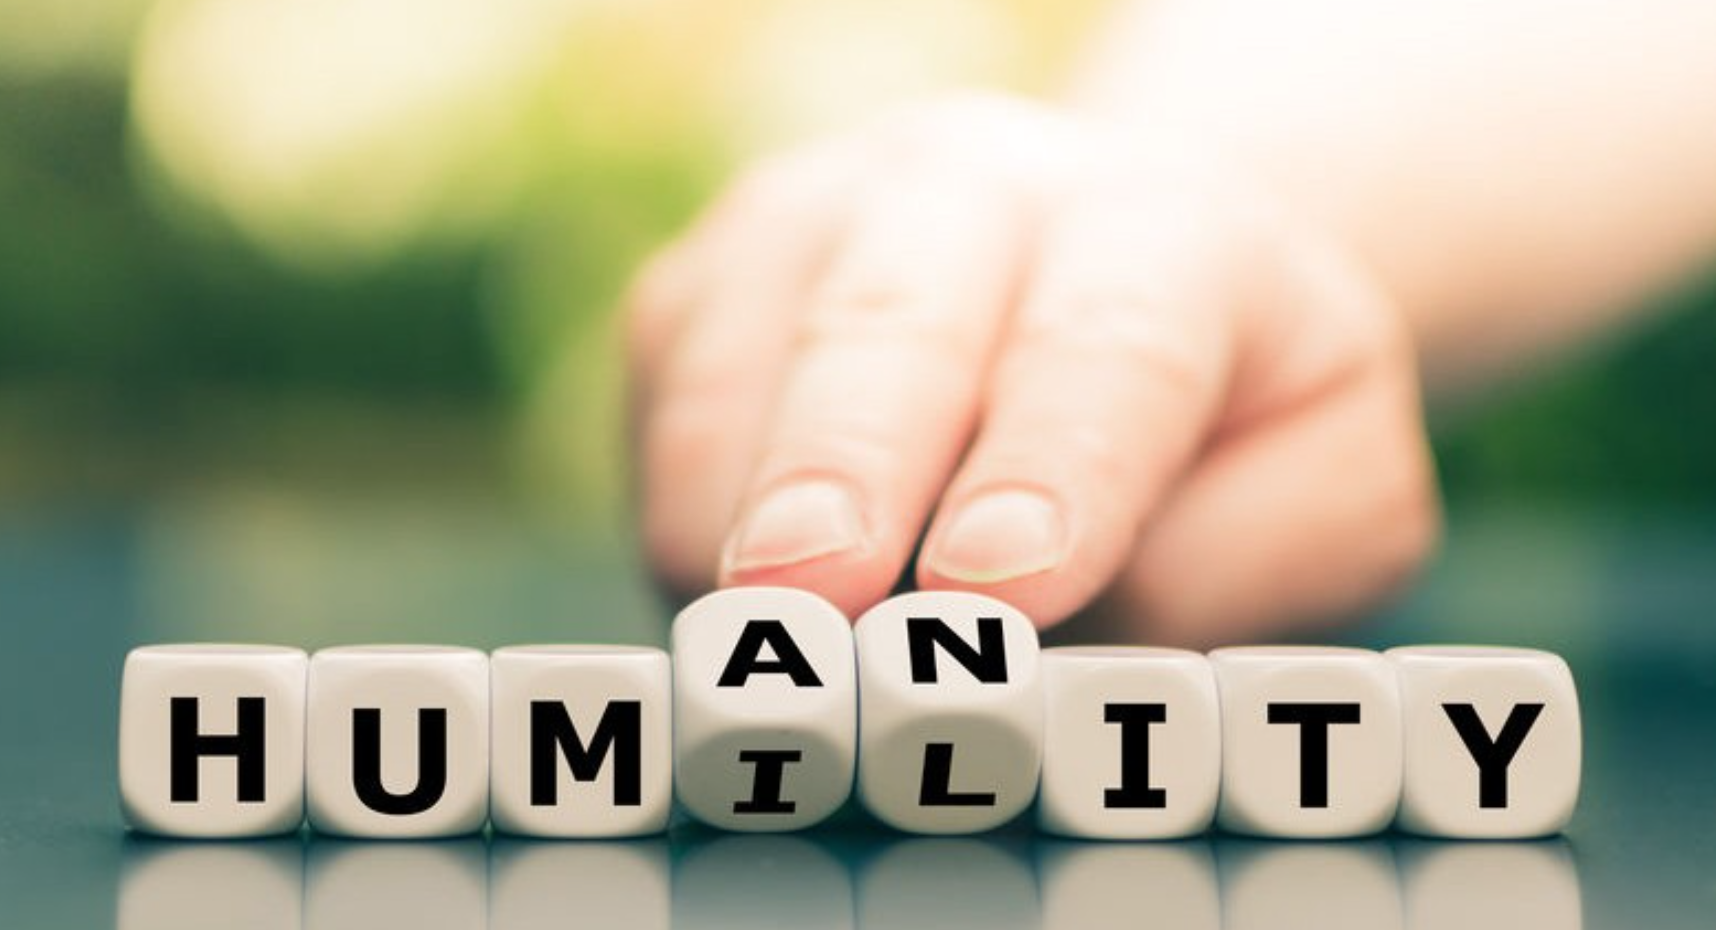 humanity humility